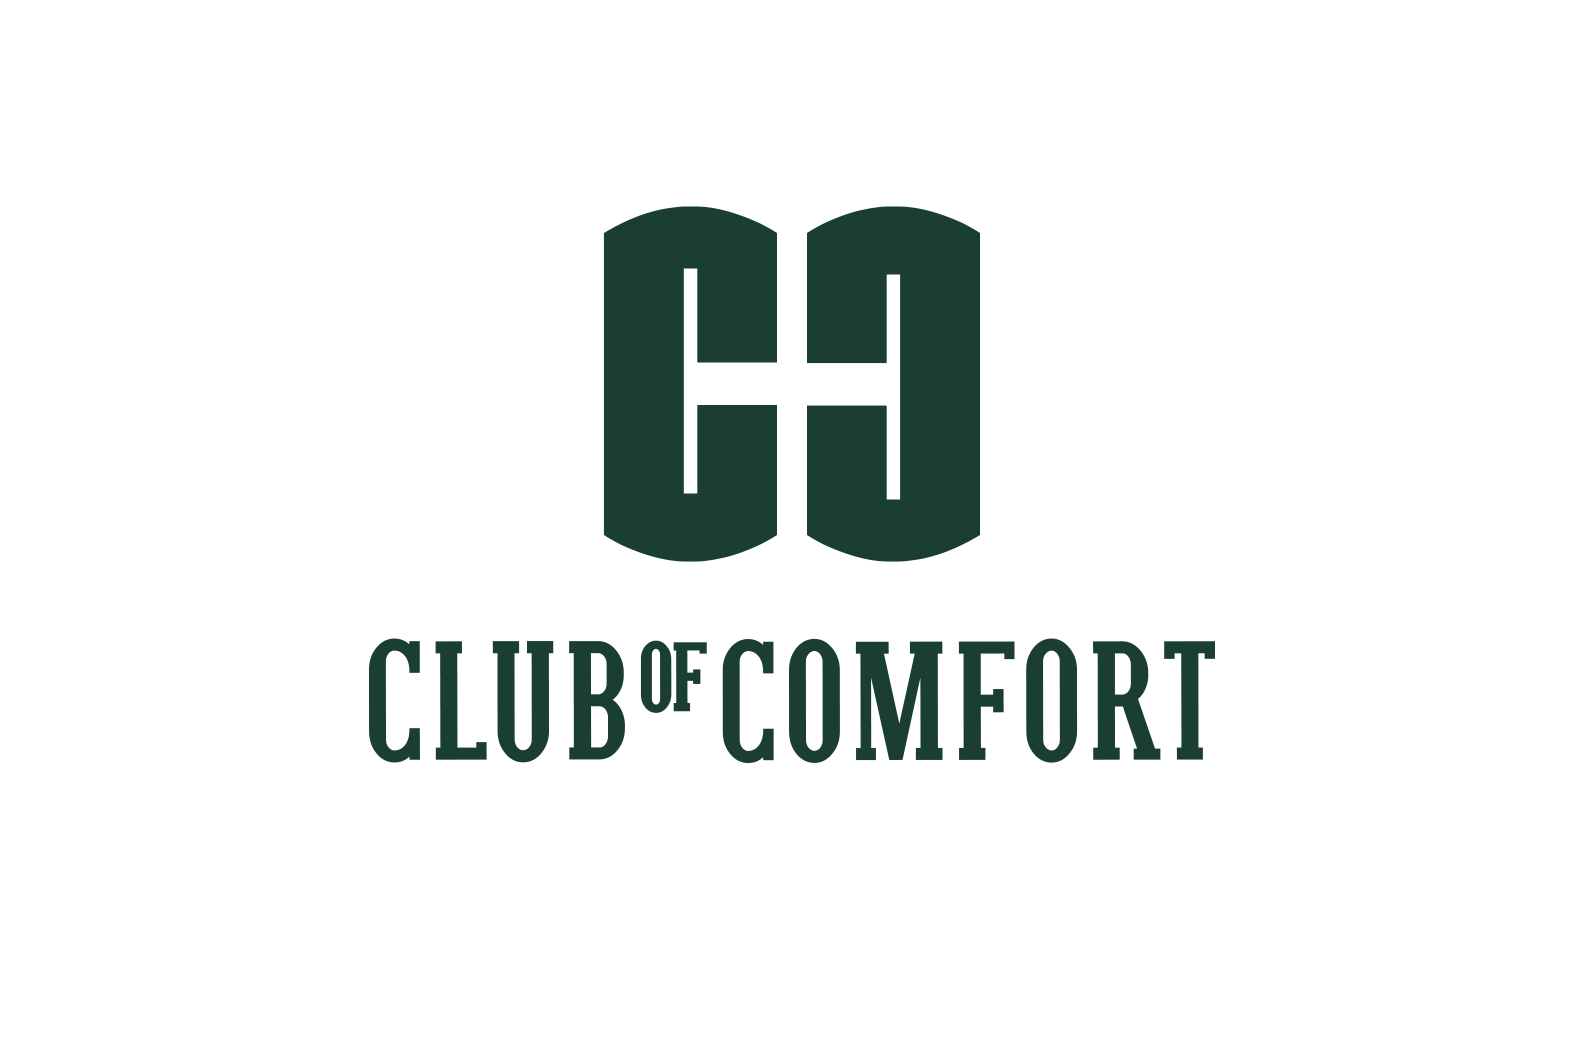 Club of comfort